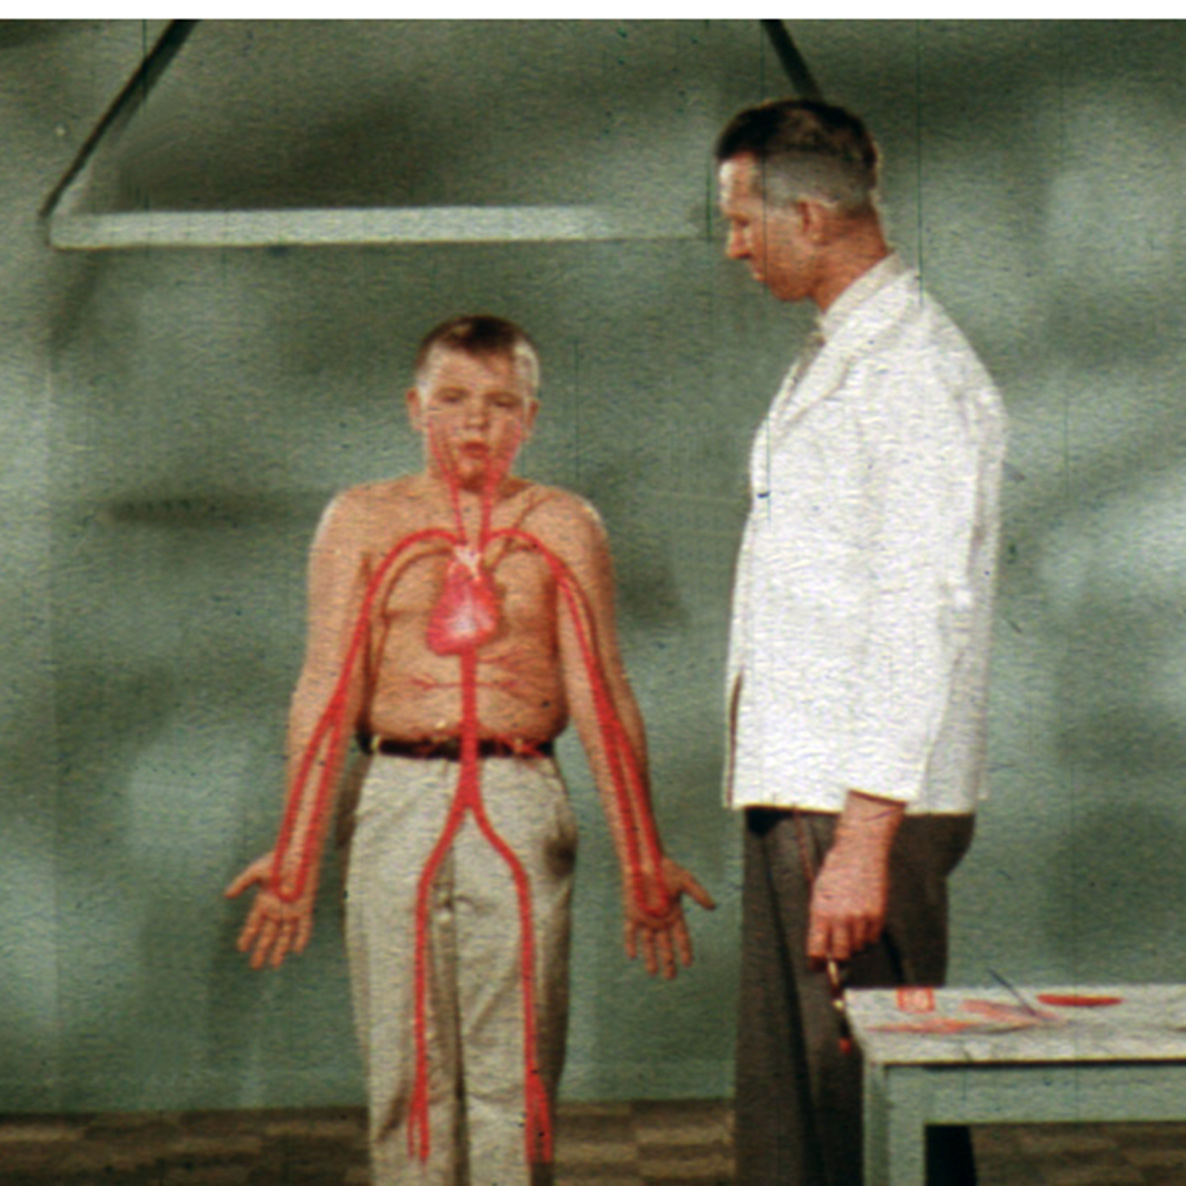 Scientist and Child Demonstrating Anatomy